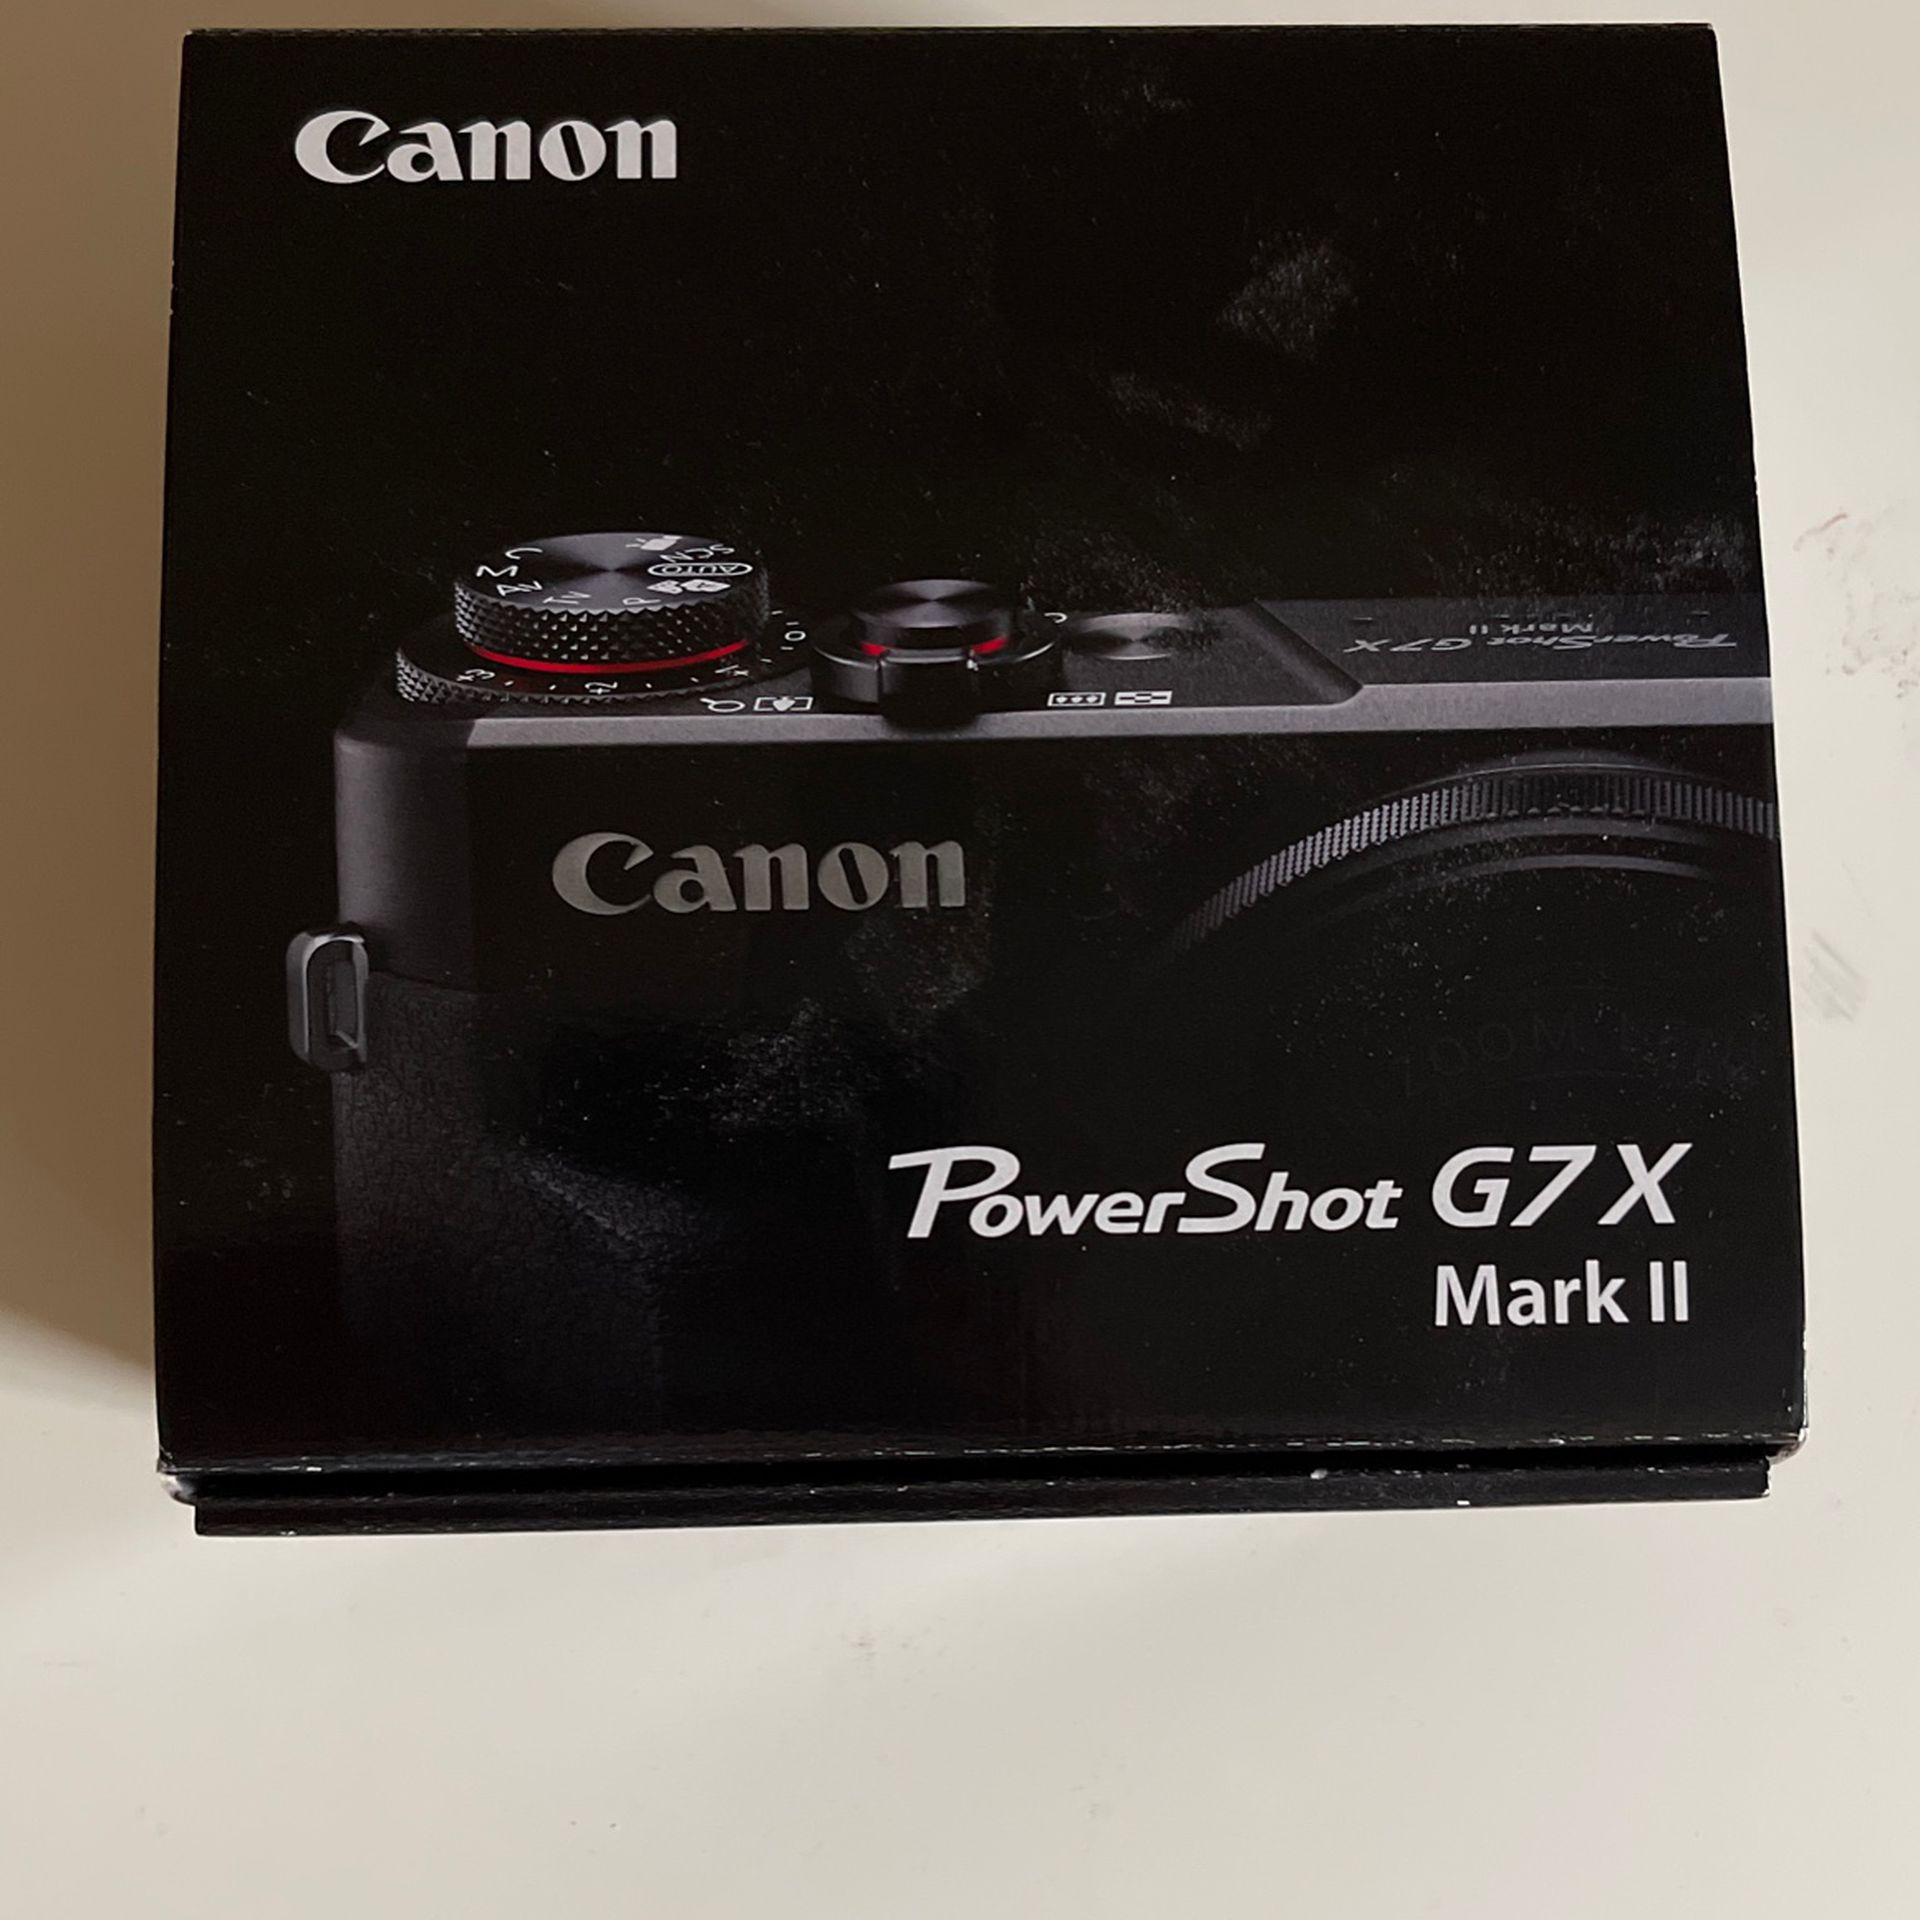 Canon PowerShot Digital Camera [G7 X Mark II] with Wi-Fi & NFC, LCD Screen, and 1-inch Sensor - Black, 100 - 1066C001